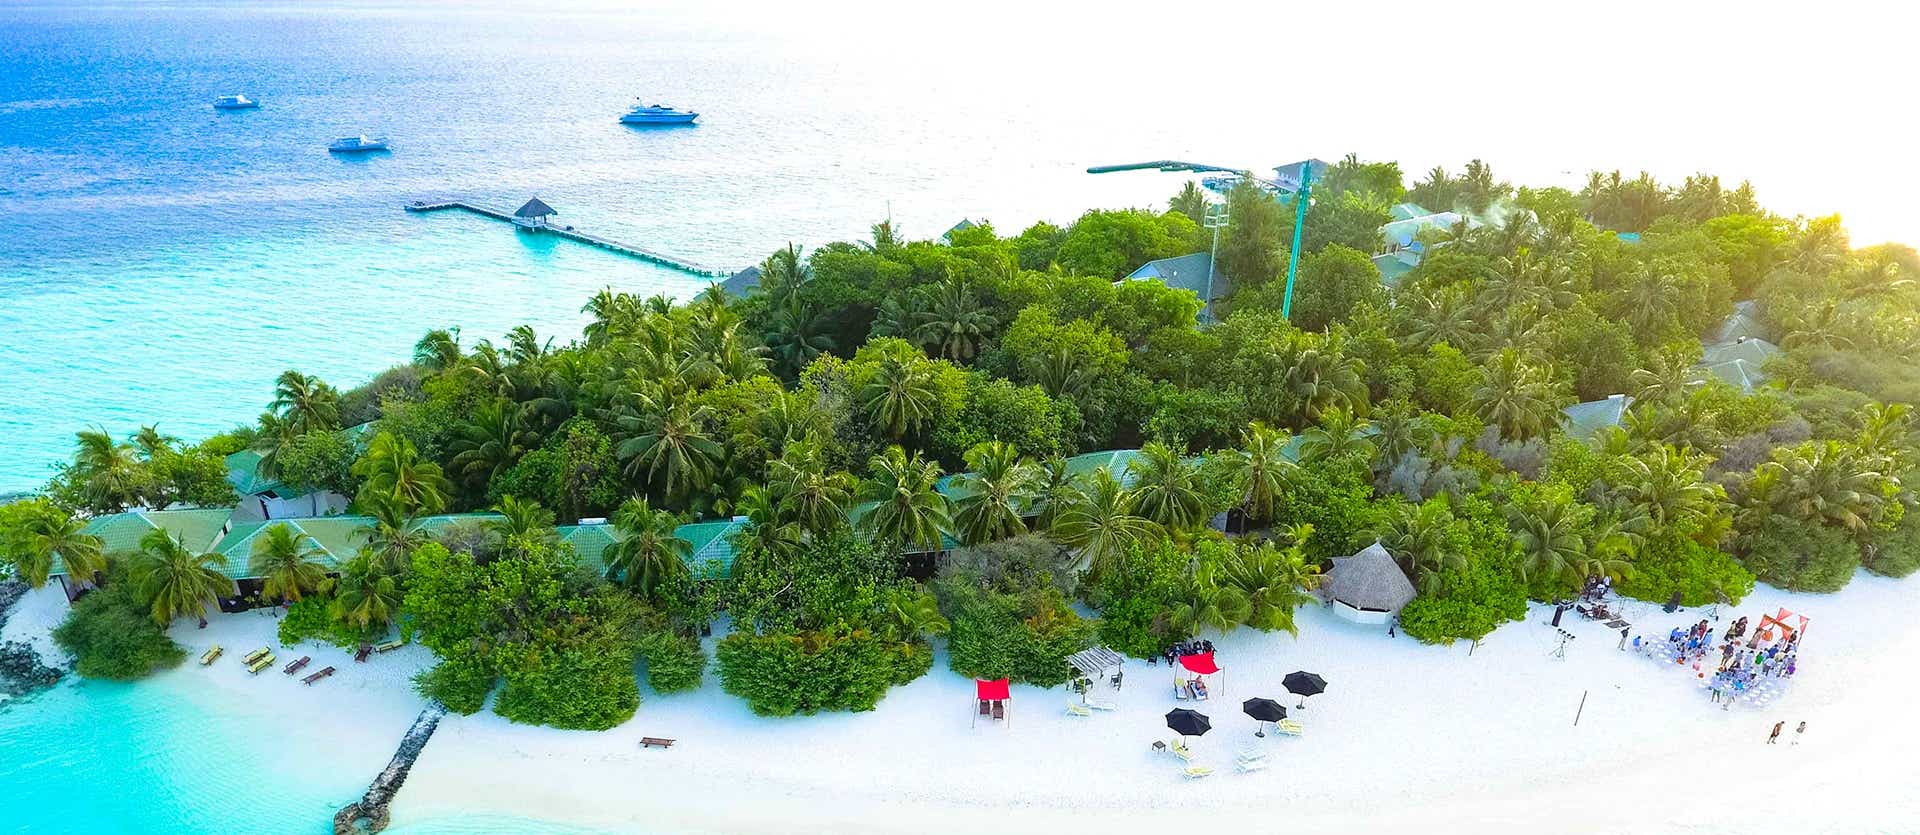 Eriyadu Island Resort <span class="iconos separador"></span> Maldivas